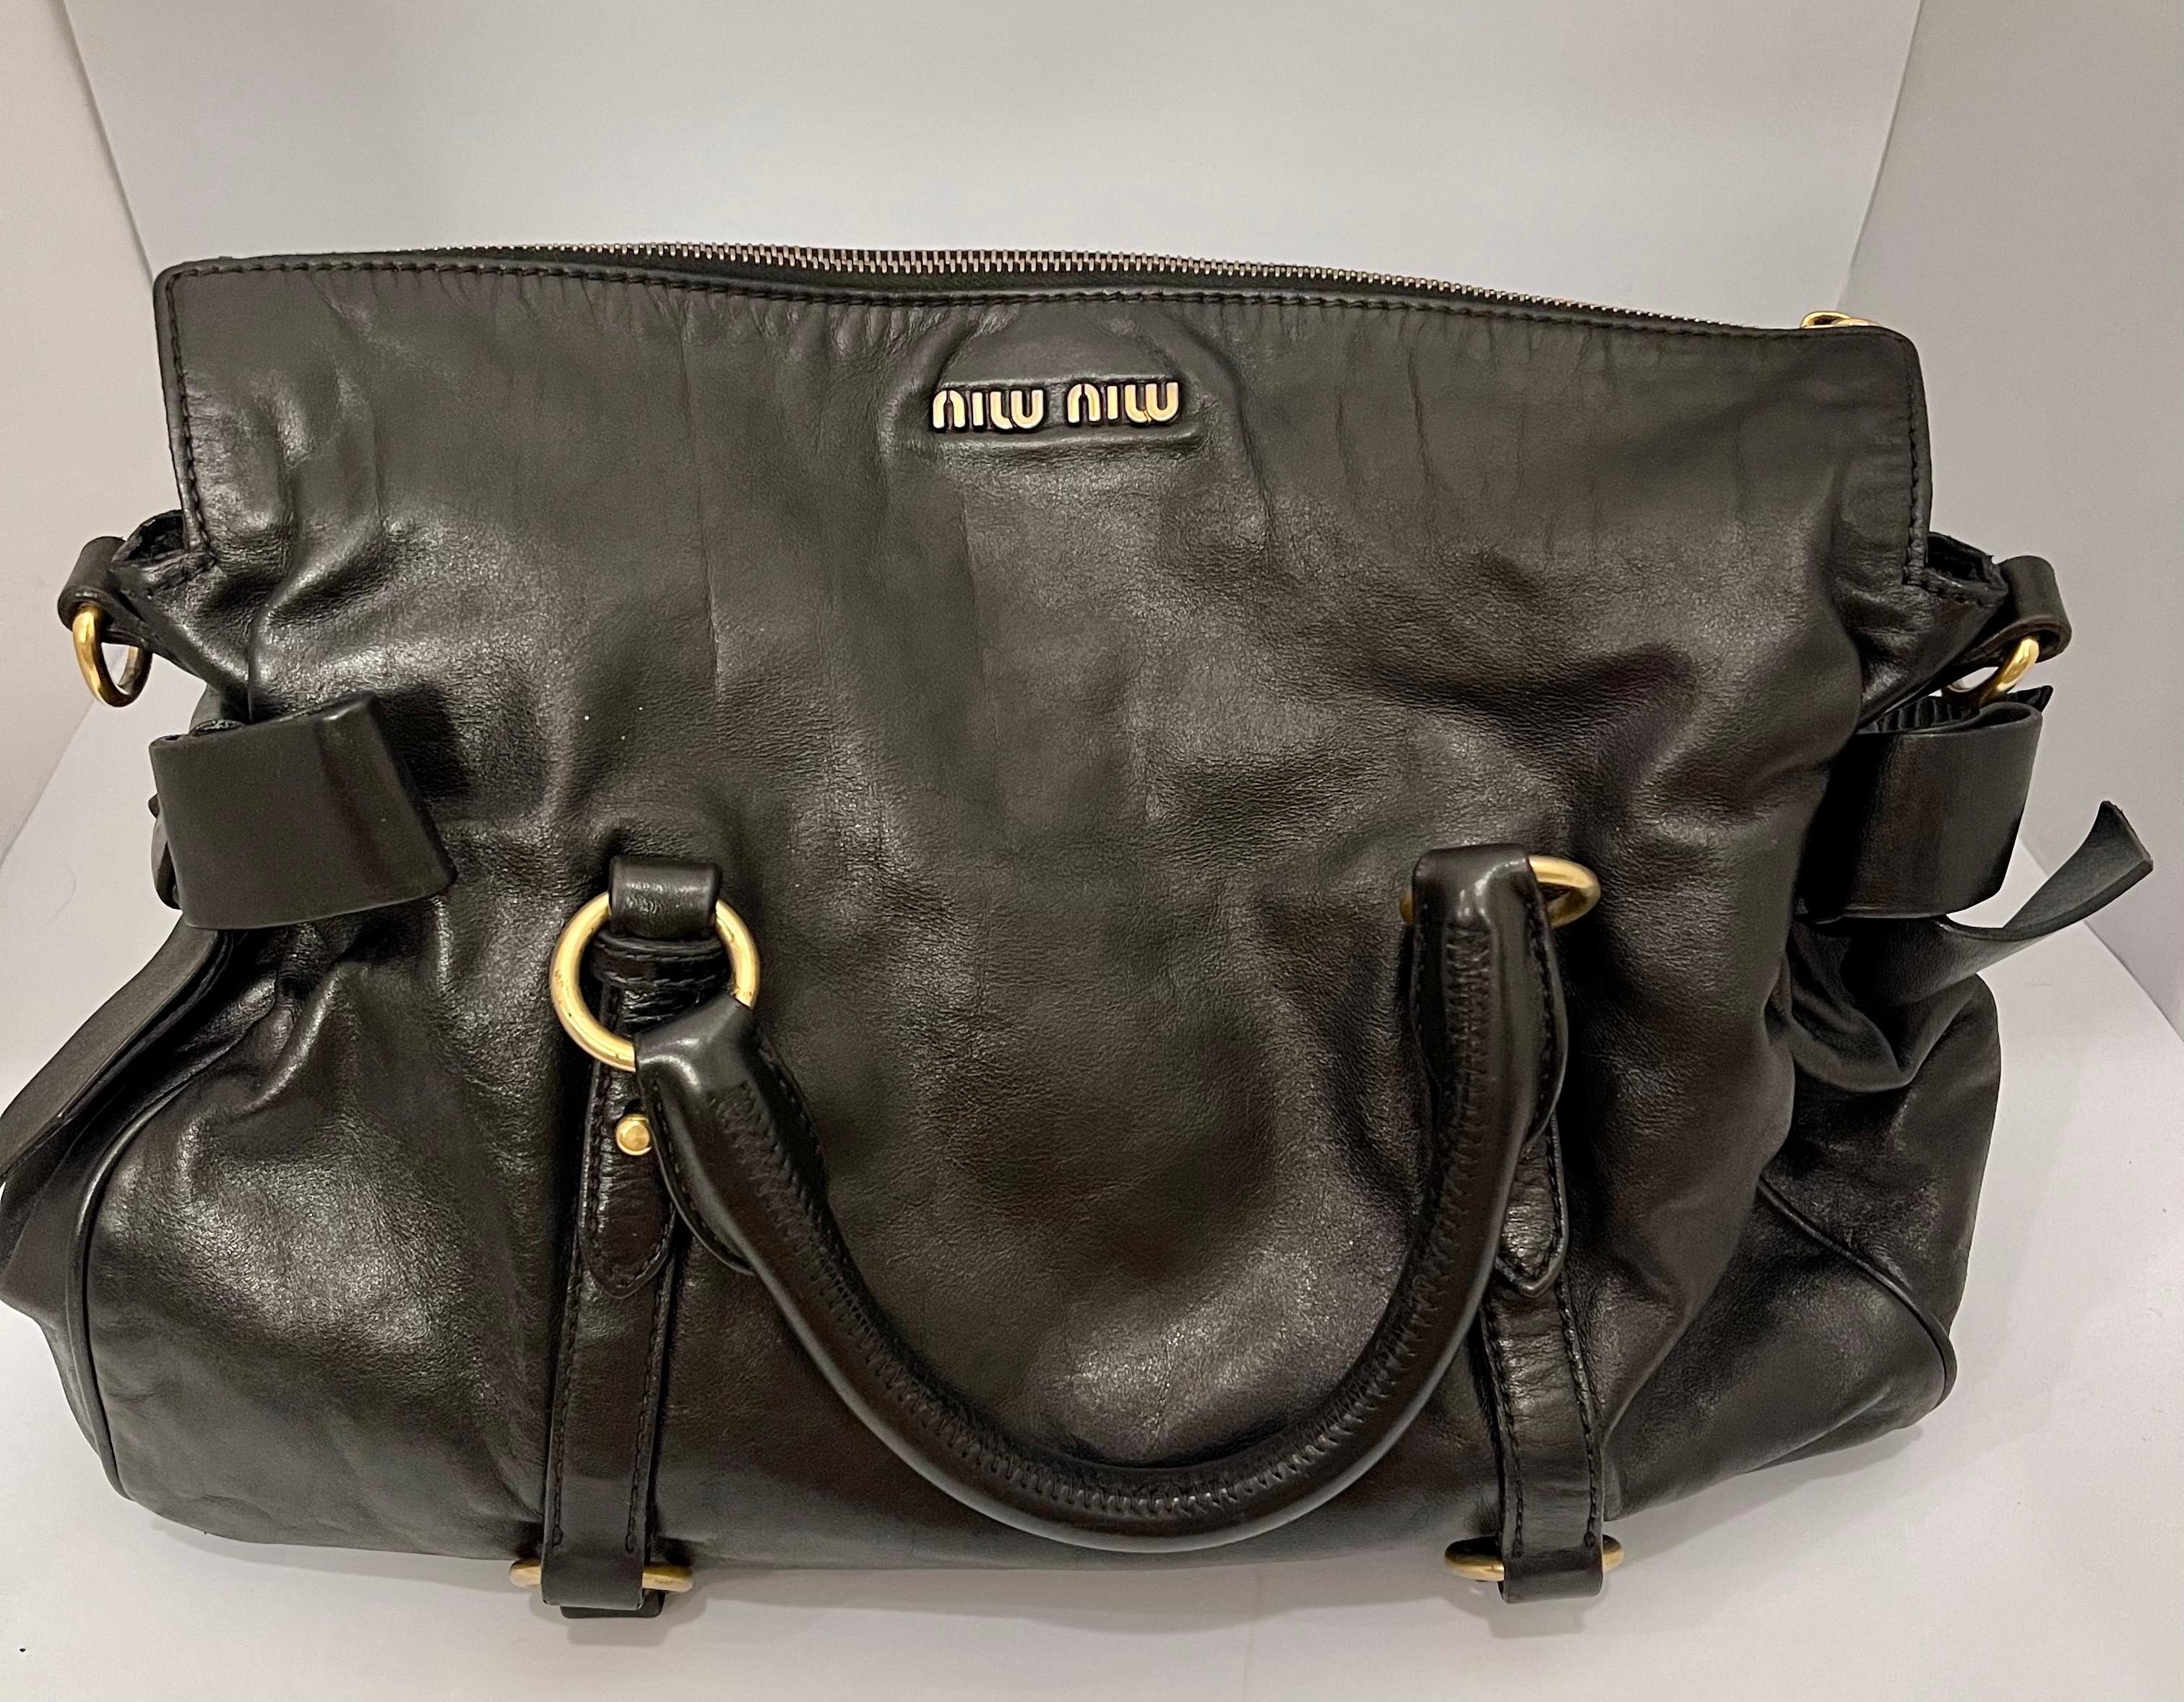 Miu Miu Prada Bow Vitello Lux Medium Calfskin Leather Satchel, Black, Bow bag 1